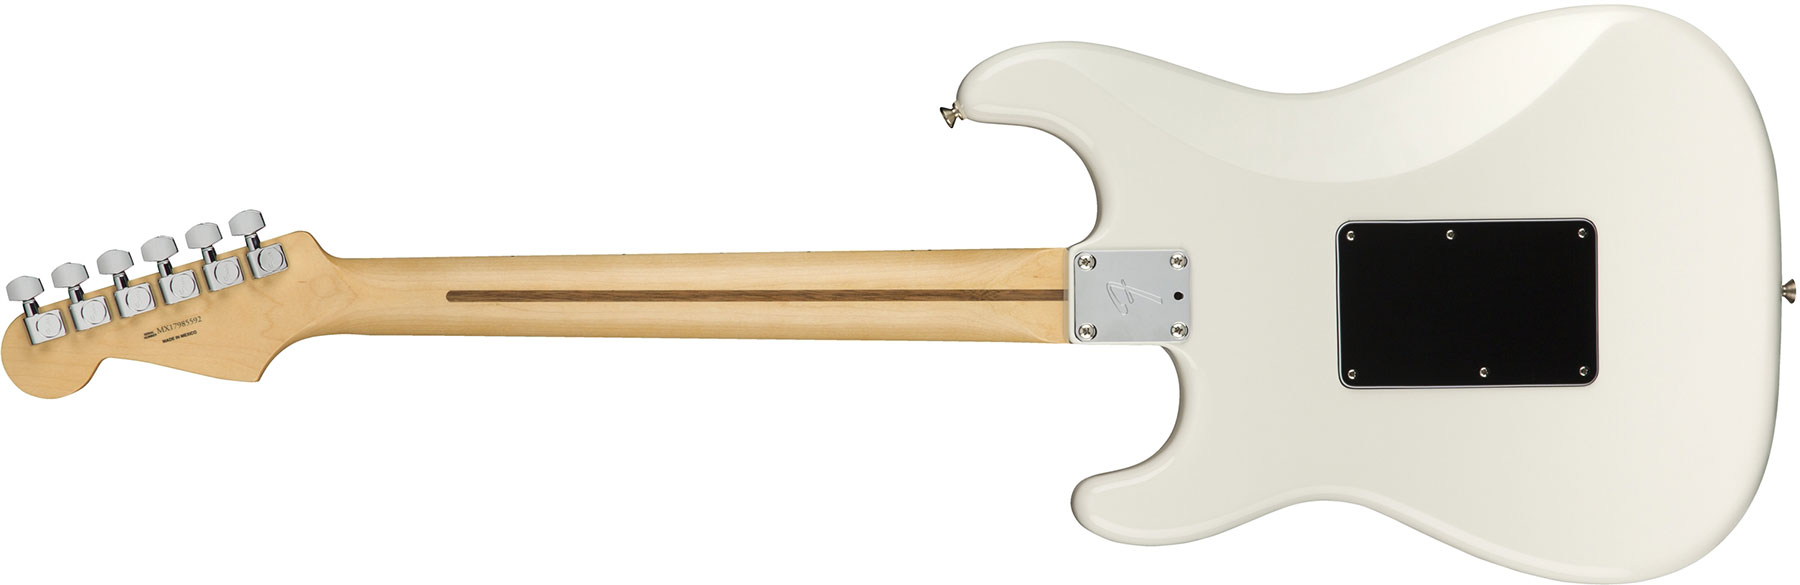 Fender Strat Player Floyd Rose Mex Hss Fr Mn - Polar White - Guitare Électrique Forme Str - Variation 1